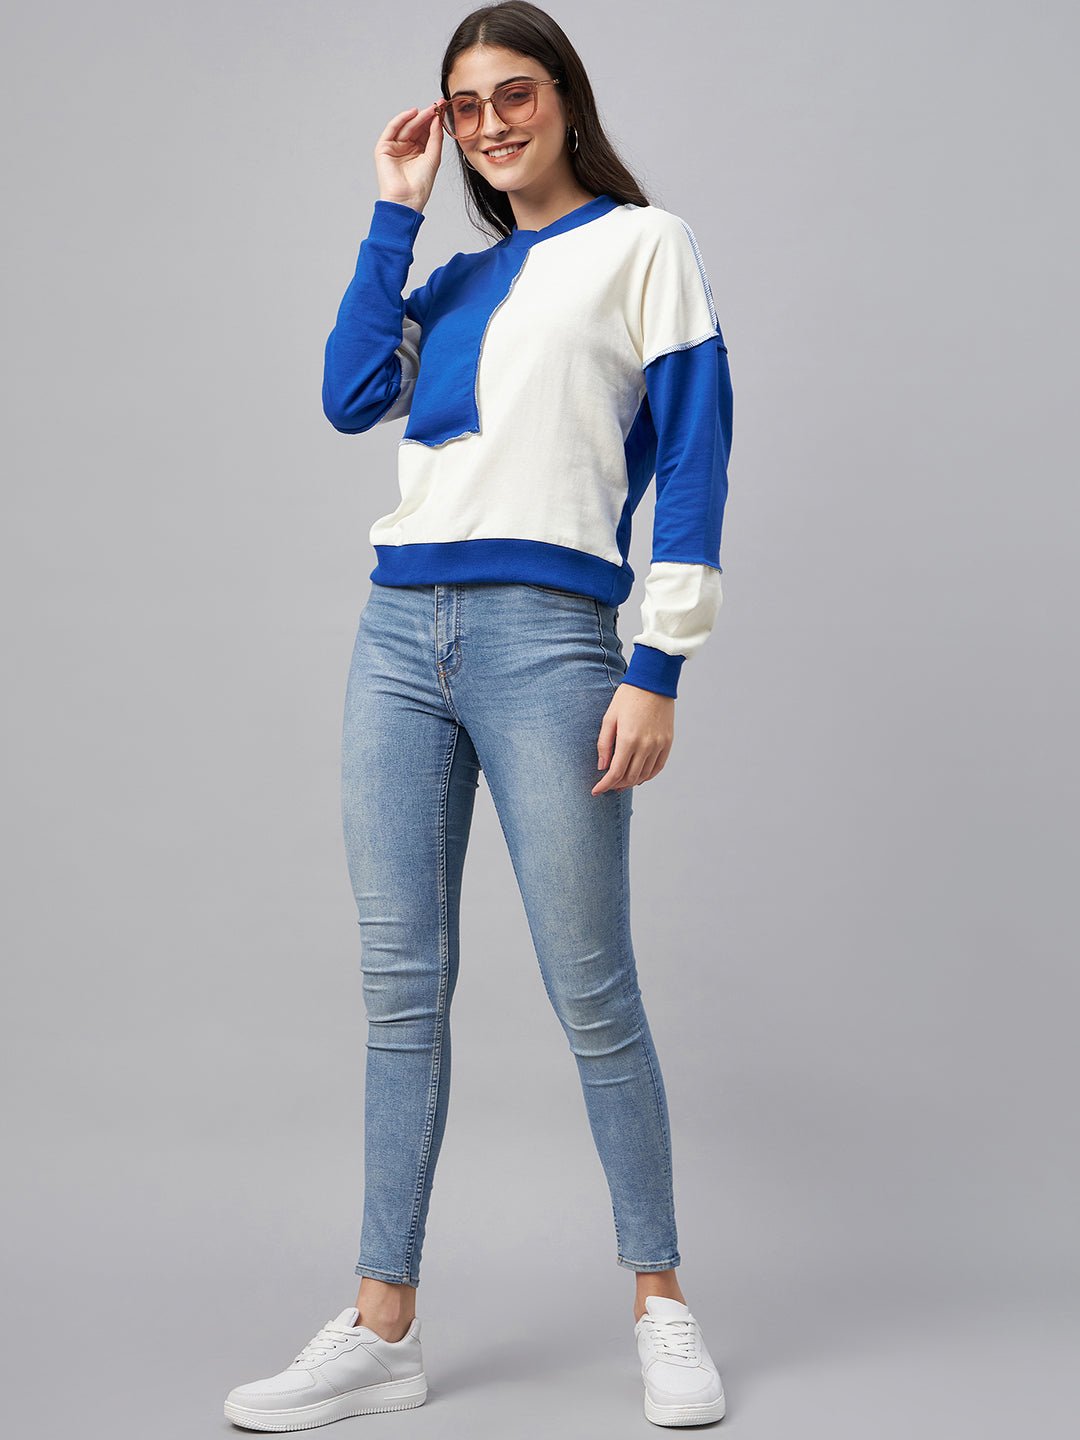 Royal Blue Colorblocked Sweatshirt - clubyork